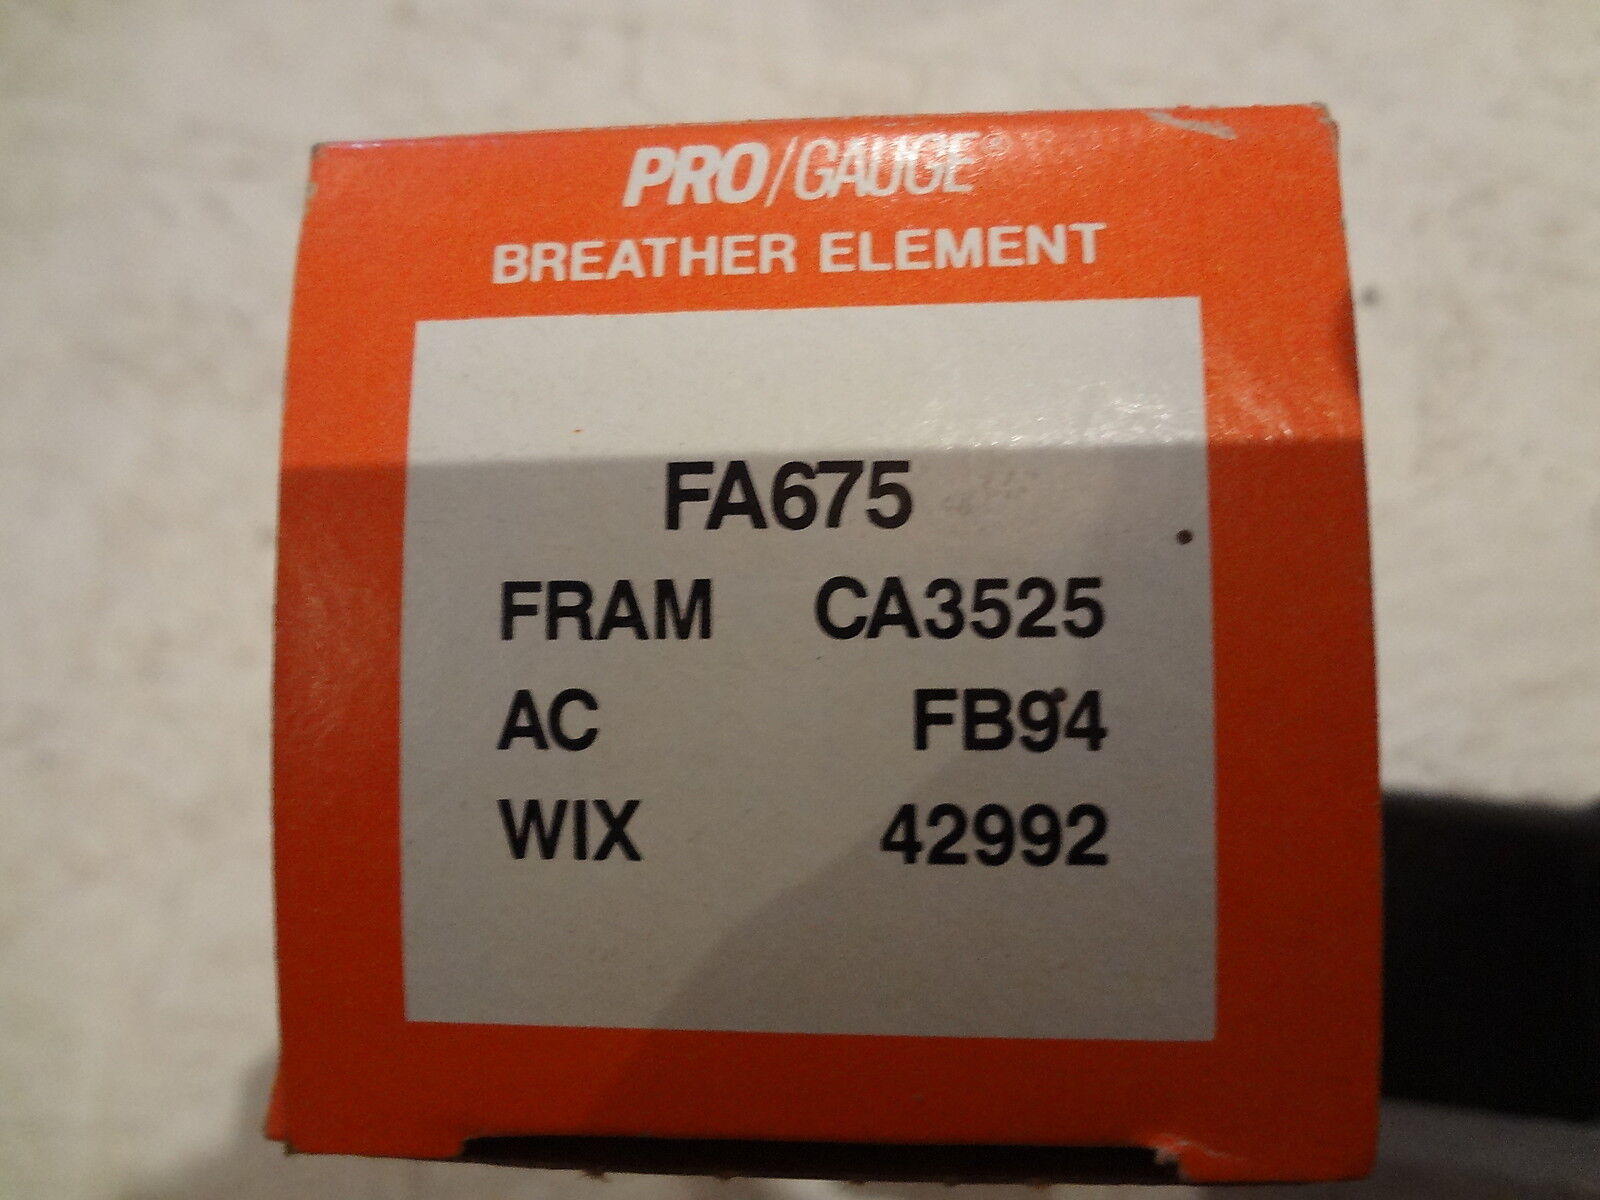 QTY=16: PRO GAUGE BREATHER ELEMENT FA675 (FRAM CA3525, AC FB94, WIX 42992)